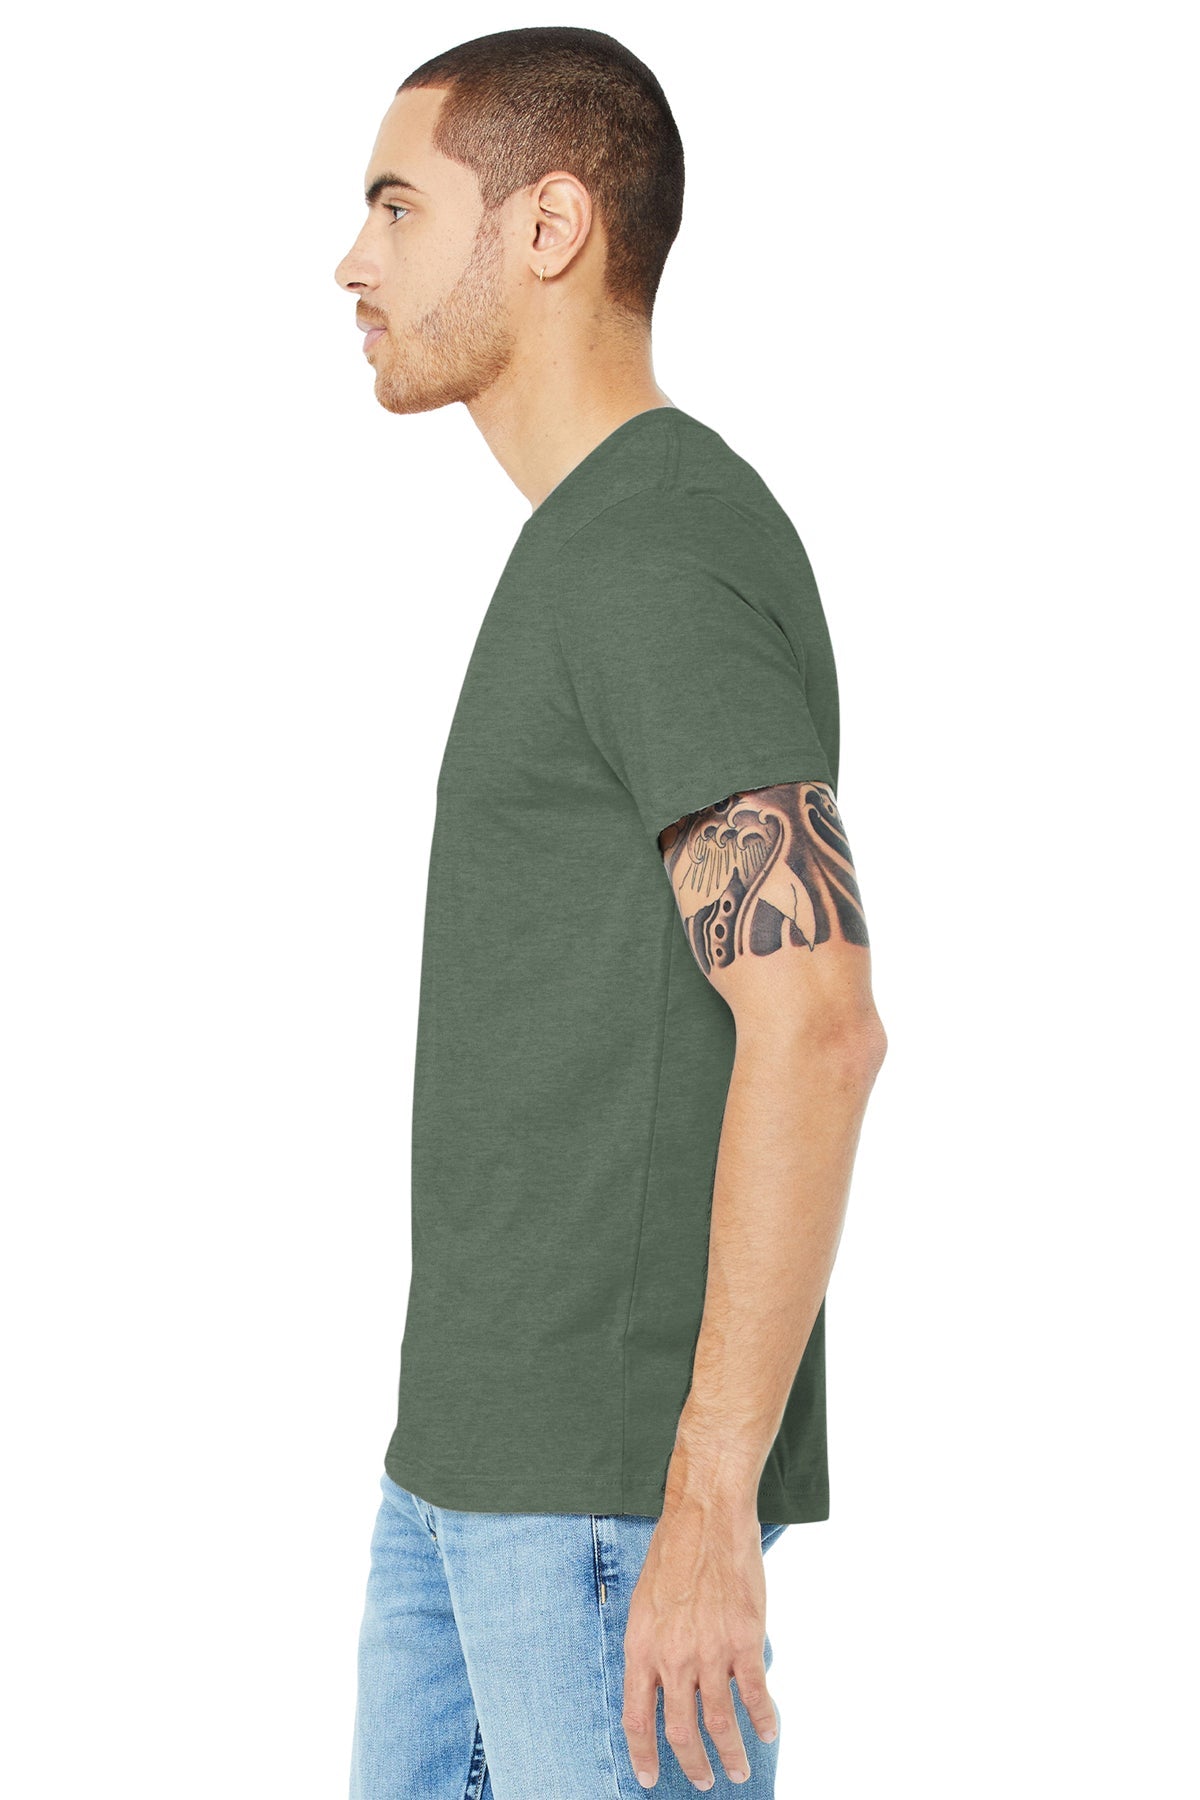 bella + canvas unisex jersey short sleeve t-shirt 3001c hthr miltary grn